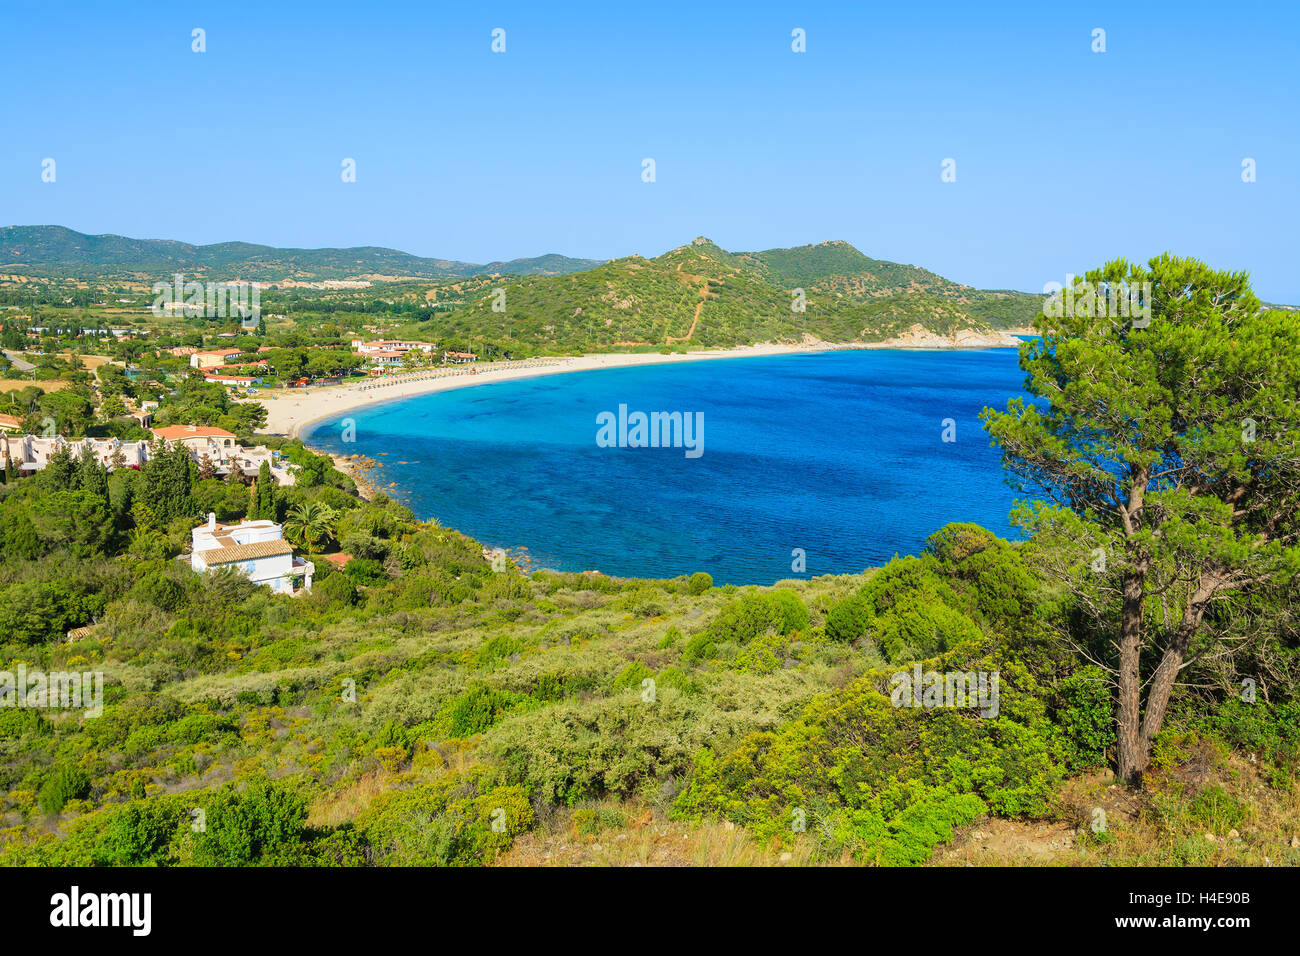 Coast of Sardinia island with view of beautiful Capo Boi bay, Italy Stock Photo